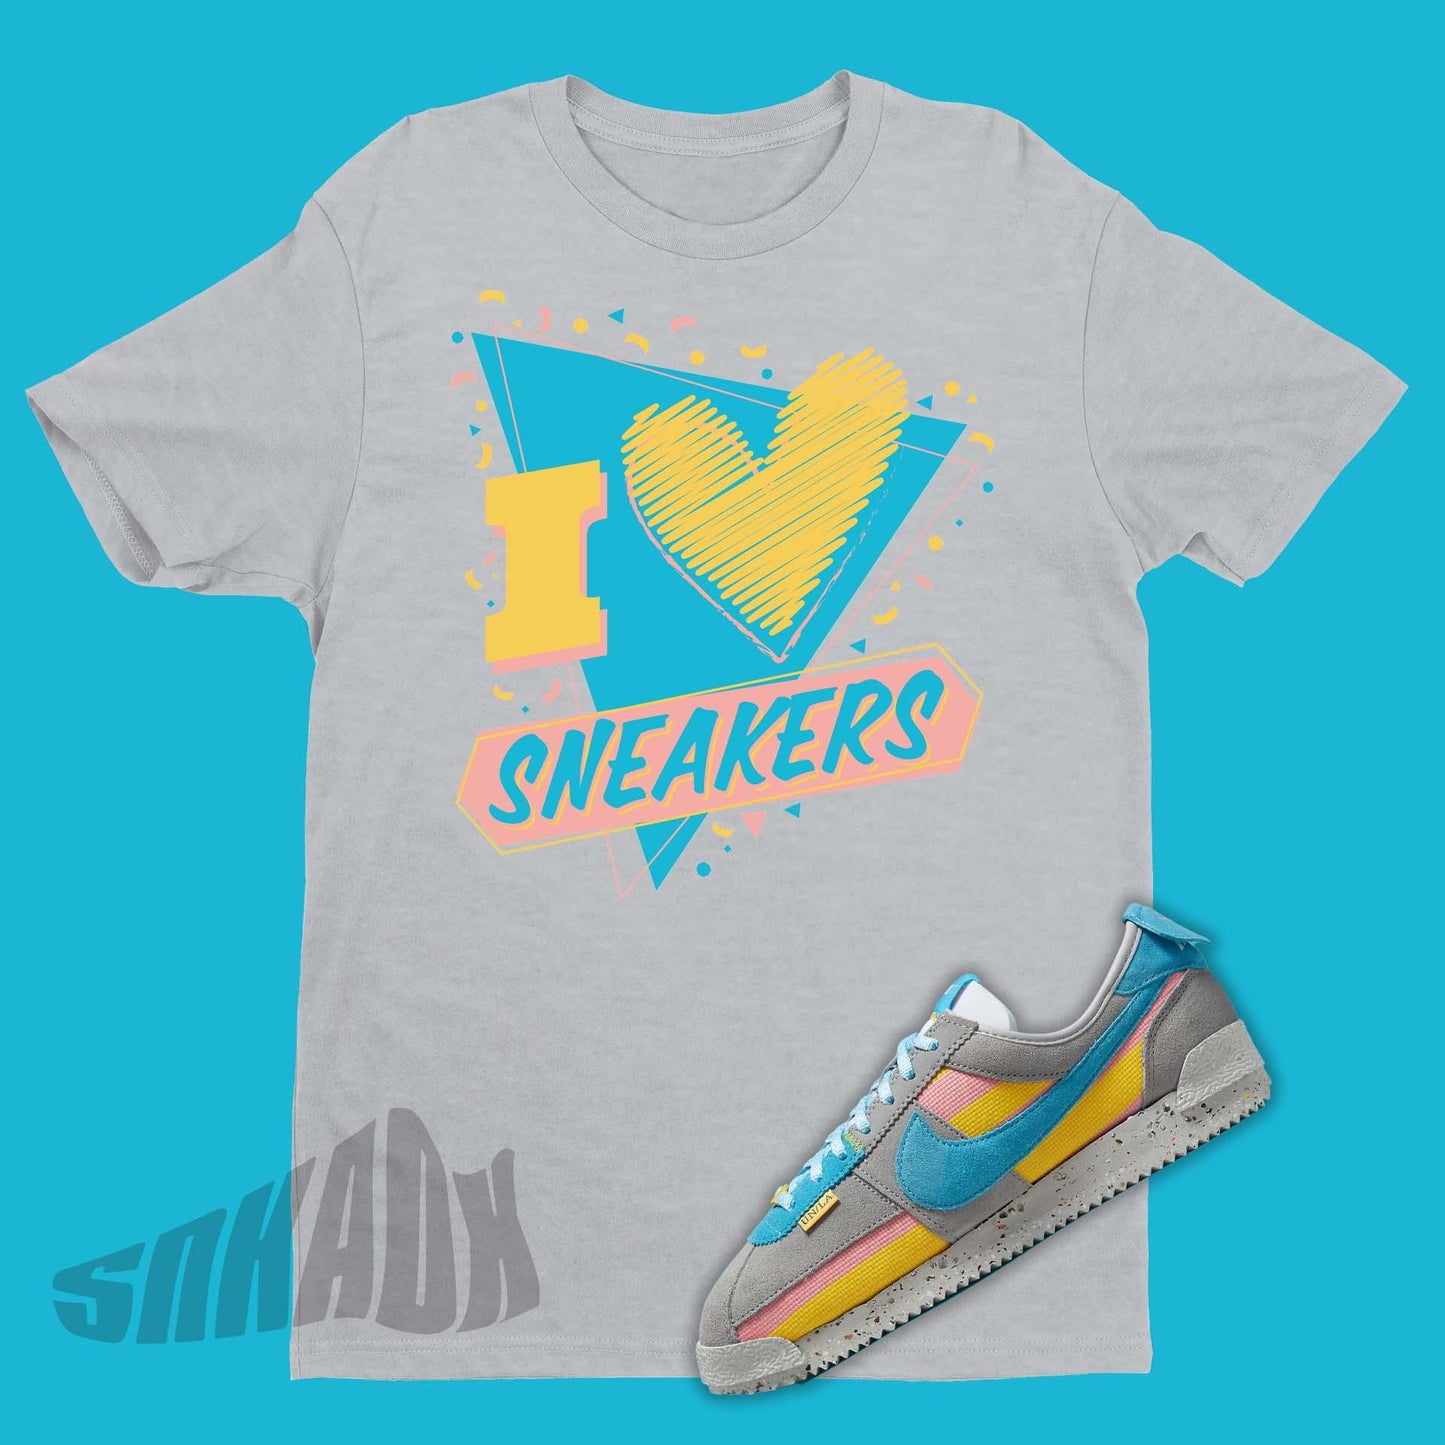 I Love Sneakers Shirt To Match Union LA Nike Cortez Blue Fury